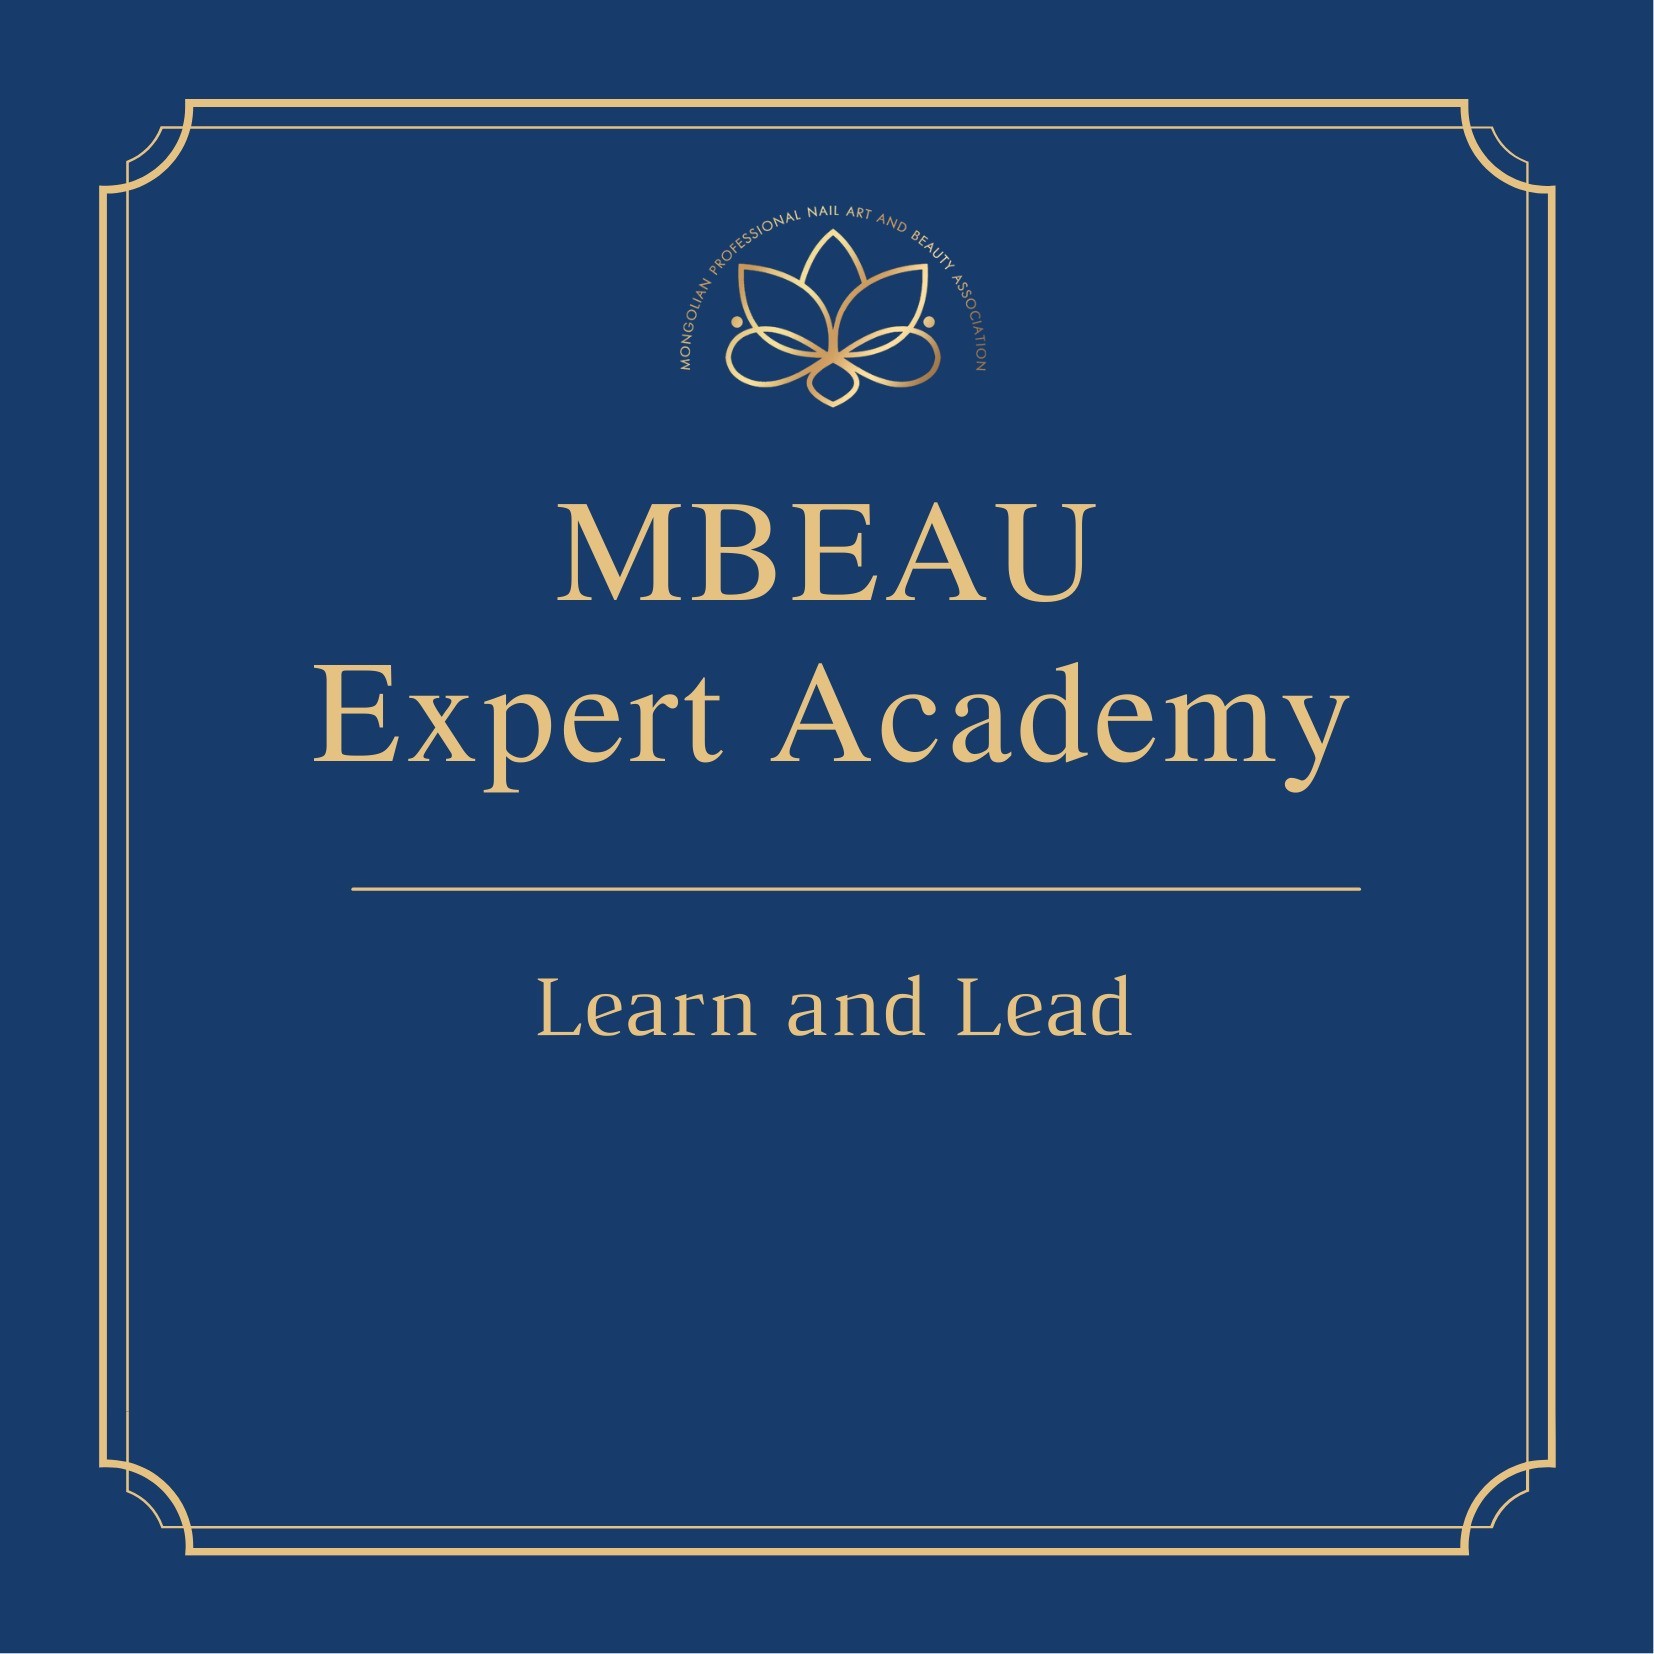 MBEAU EXPERT ACADEMY-н MODUL 1 Дасгалжуулагч бэлтгэх хөтөлбөр элсэлт авч эхэллээ